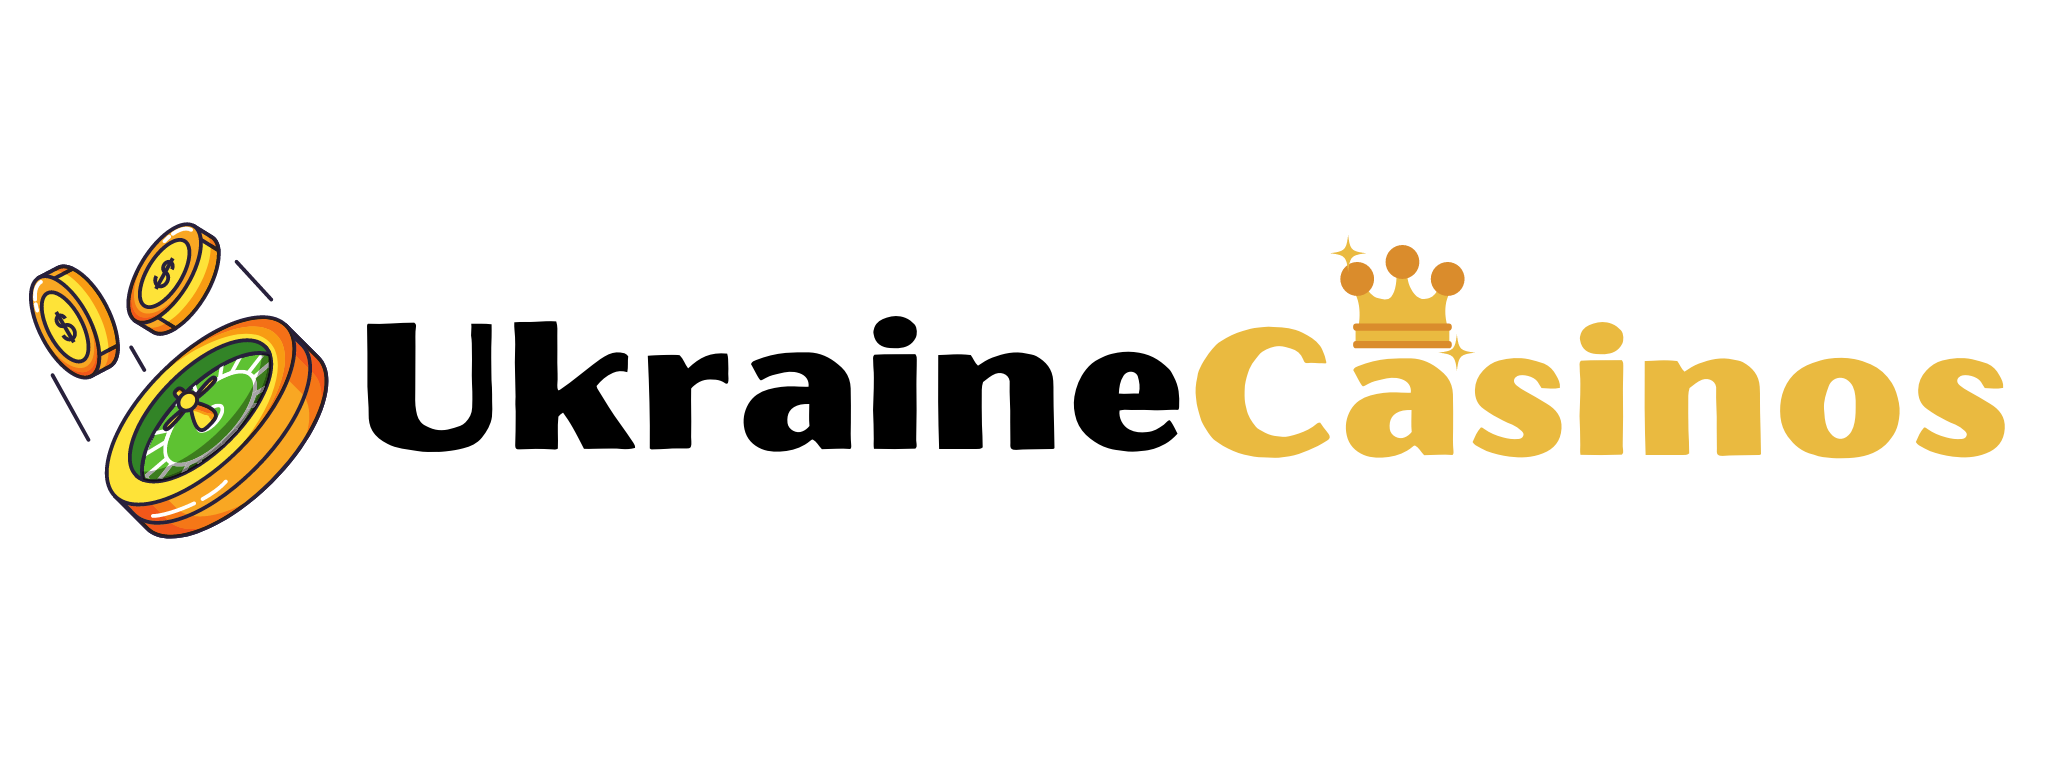 Ukraine Casinos logo